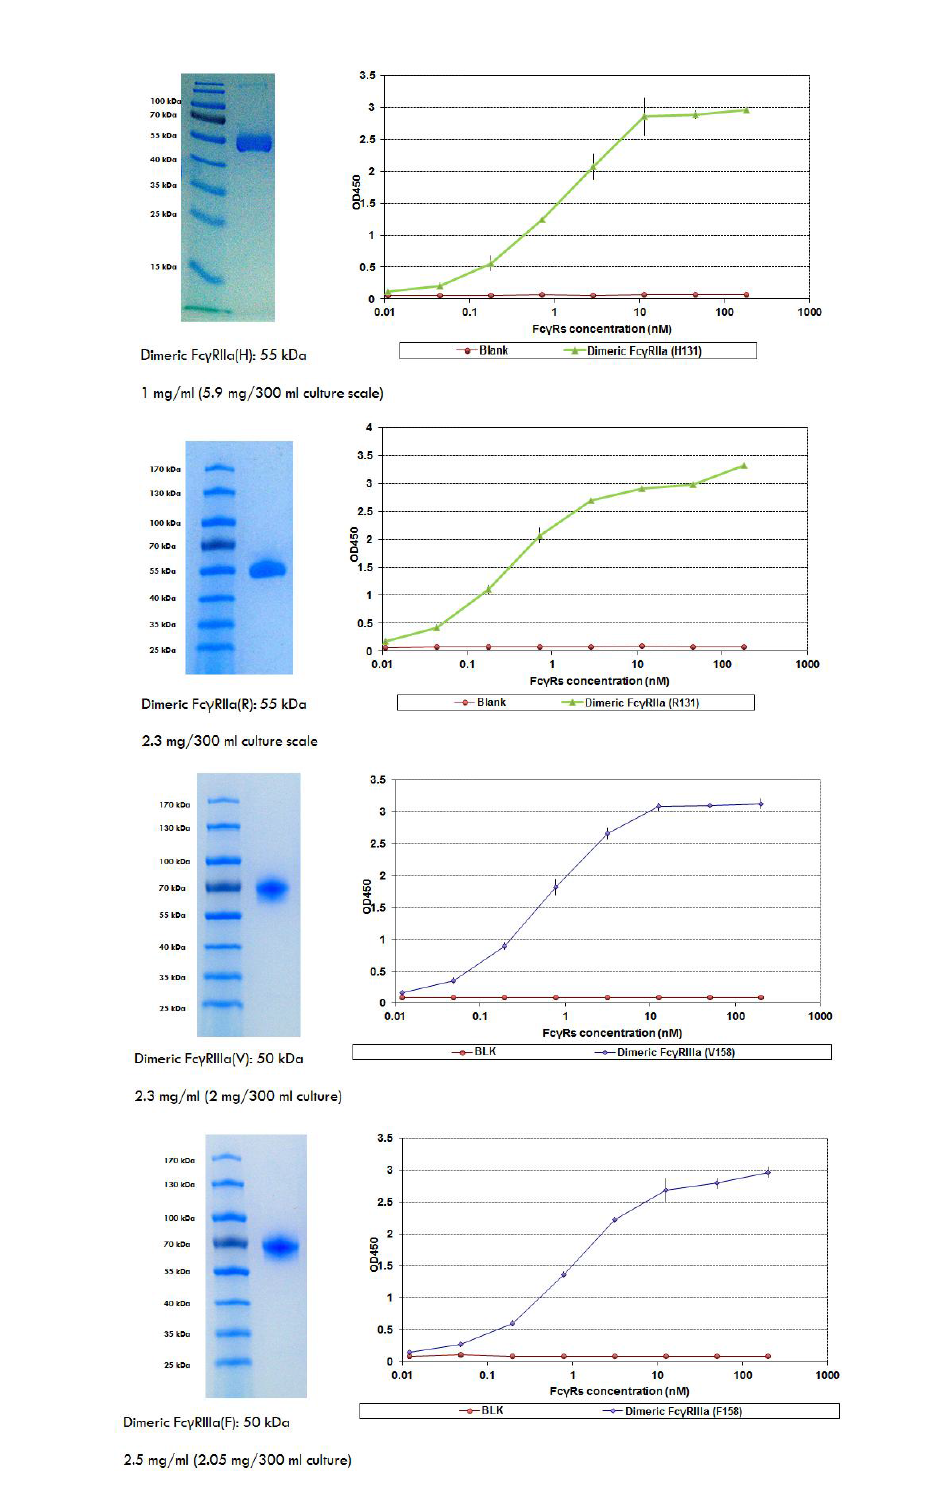 FcγRIIa, FcγRIIIa의 SDS PAGE gel 사진 및 항체에 대한 특이성을 확인하기 위한 ELISA 분석